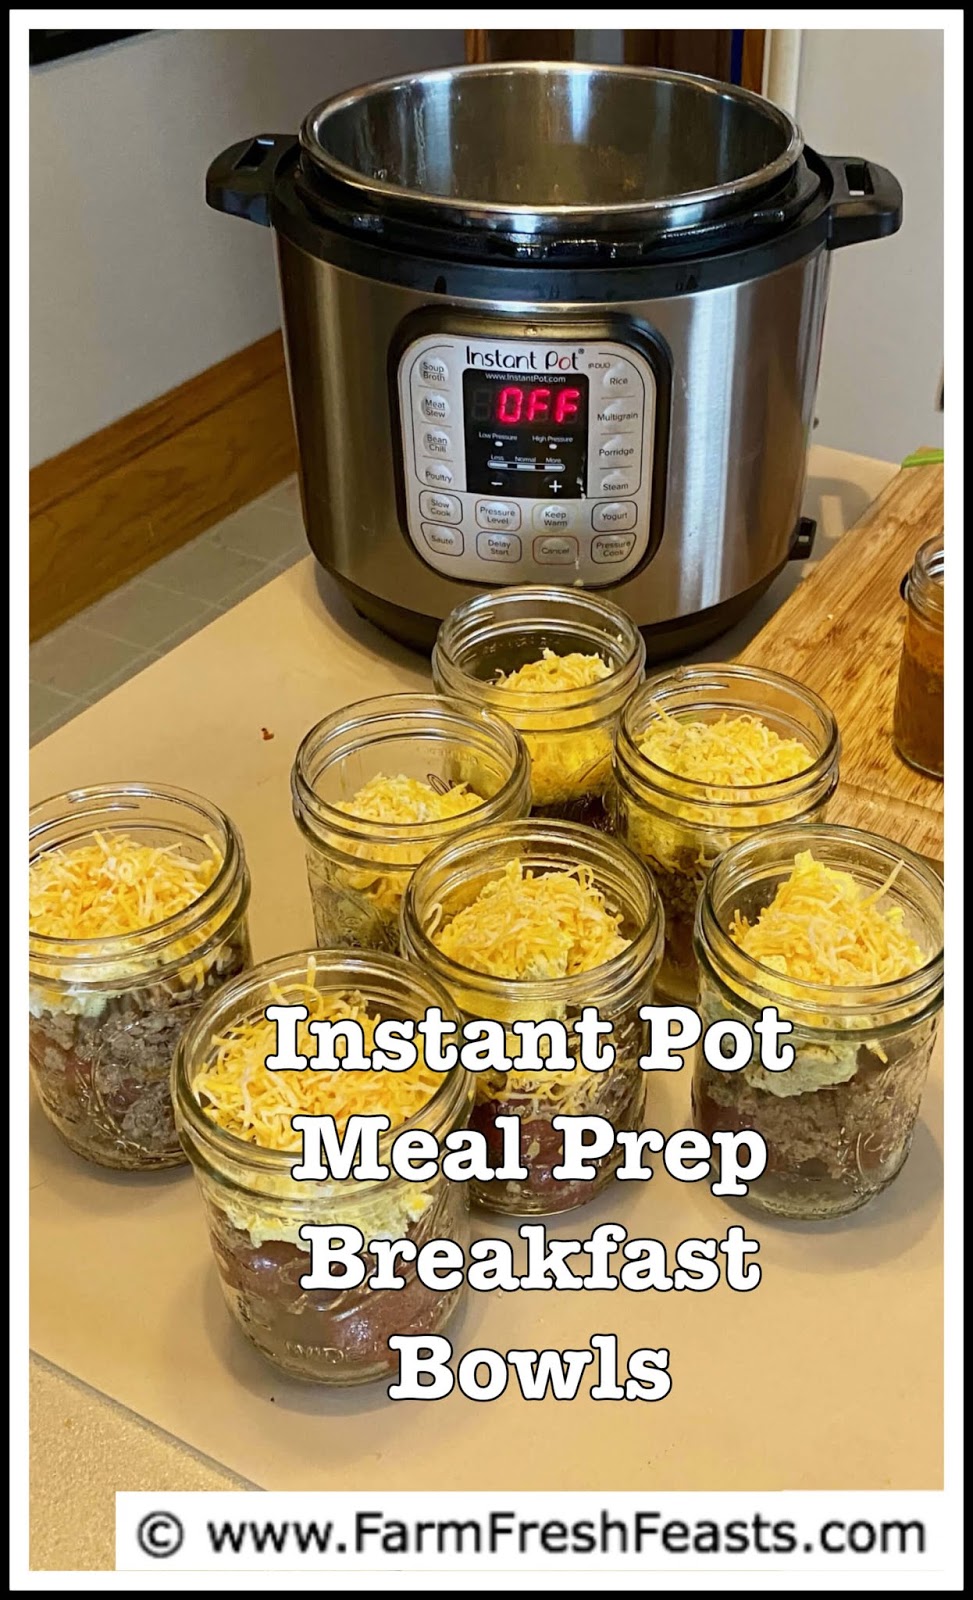 Farm Fresh Feasts: Instant Pot Breakfast Bowl Meal Prep Recipe